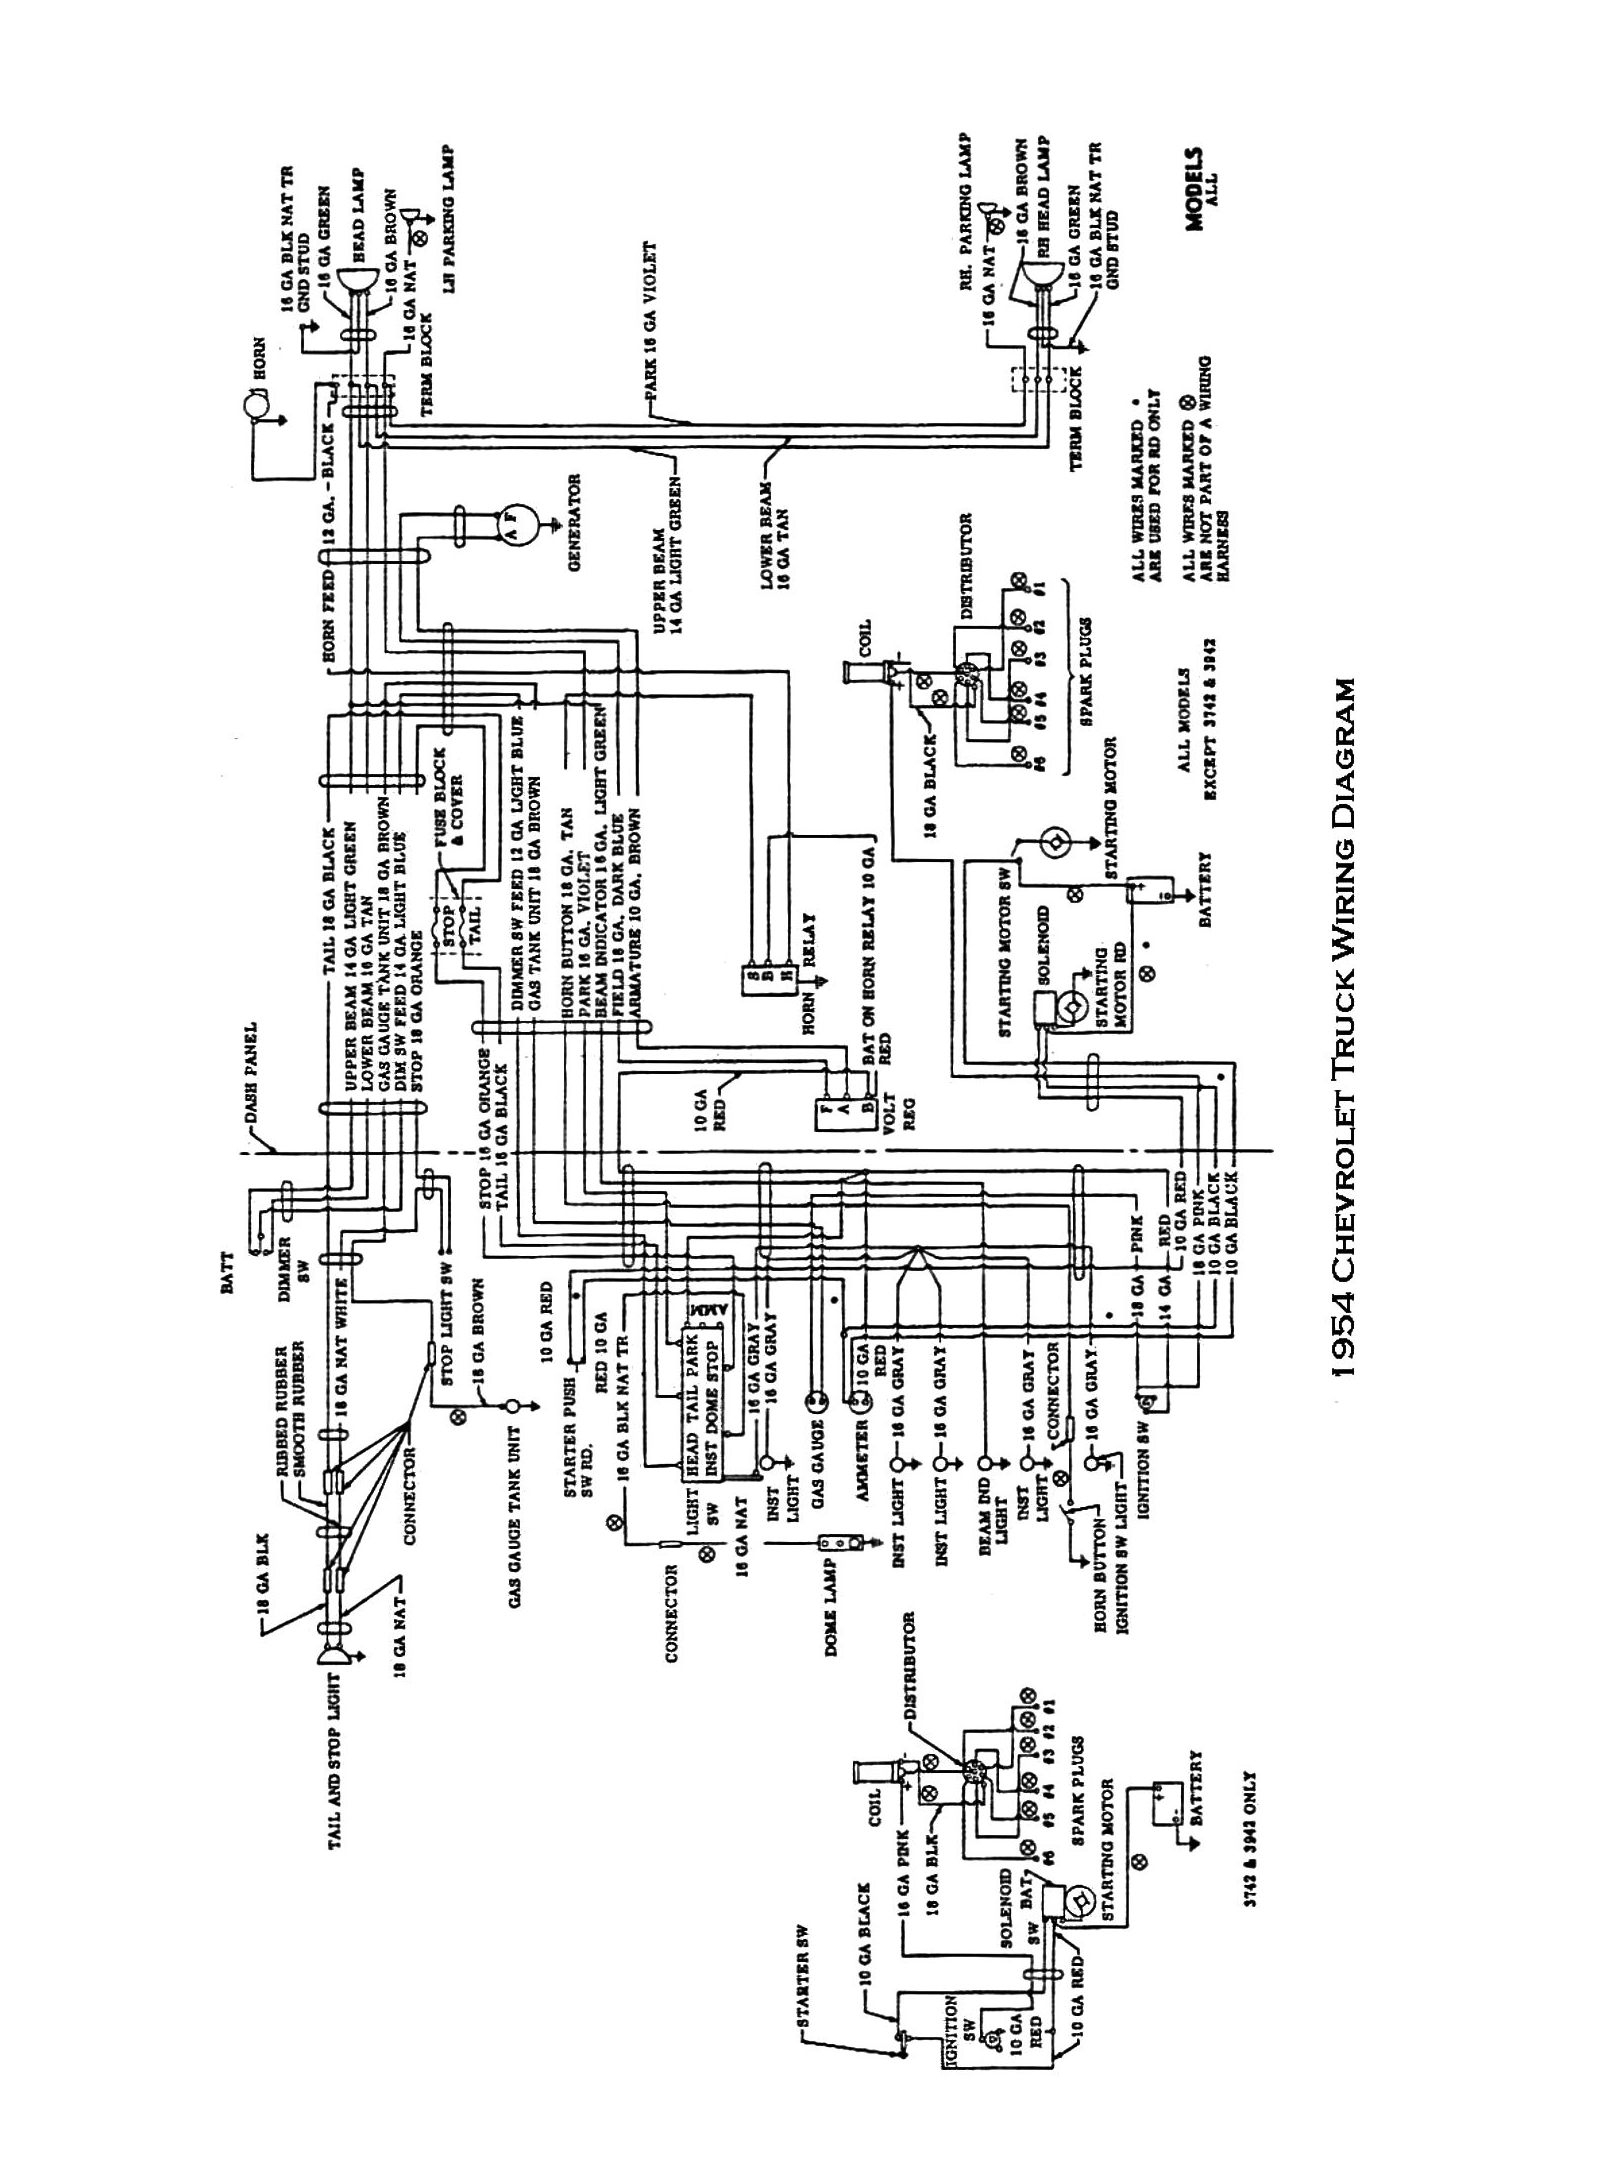 1947 International Truck Wiring Diagrams | Wiring Diagram - International Truck Wiring Diagram Manual